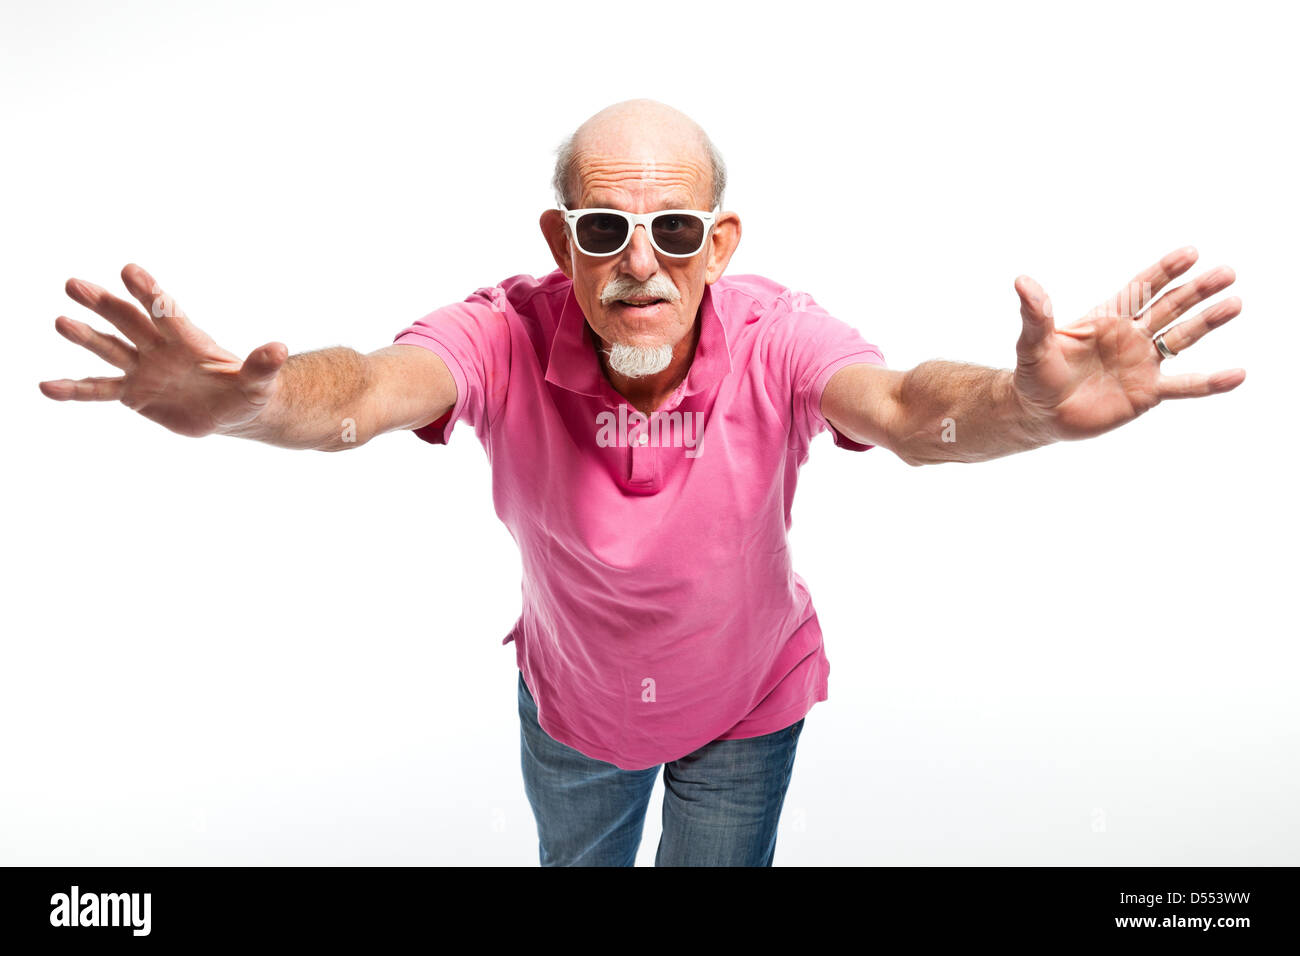 Funny expressive senior man with sunglasses. Isolated. Stock Photo